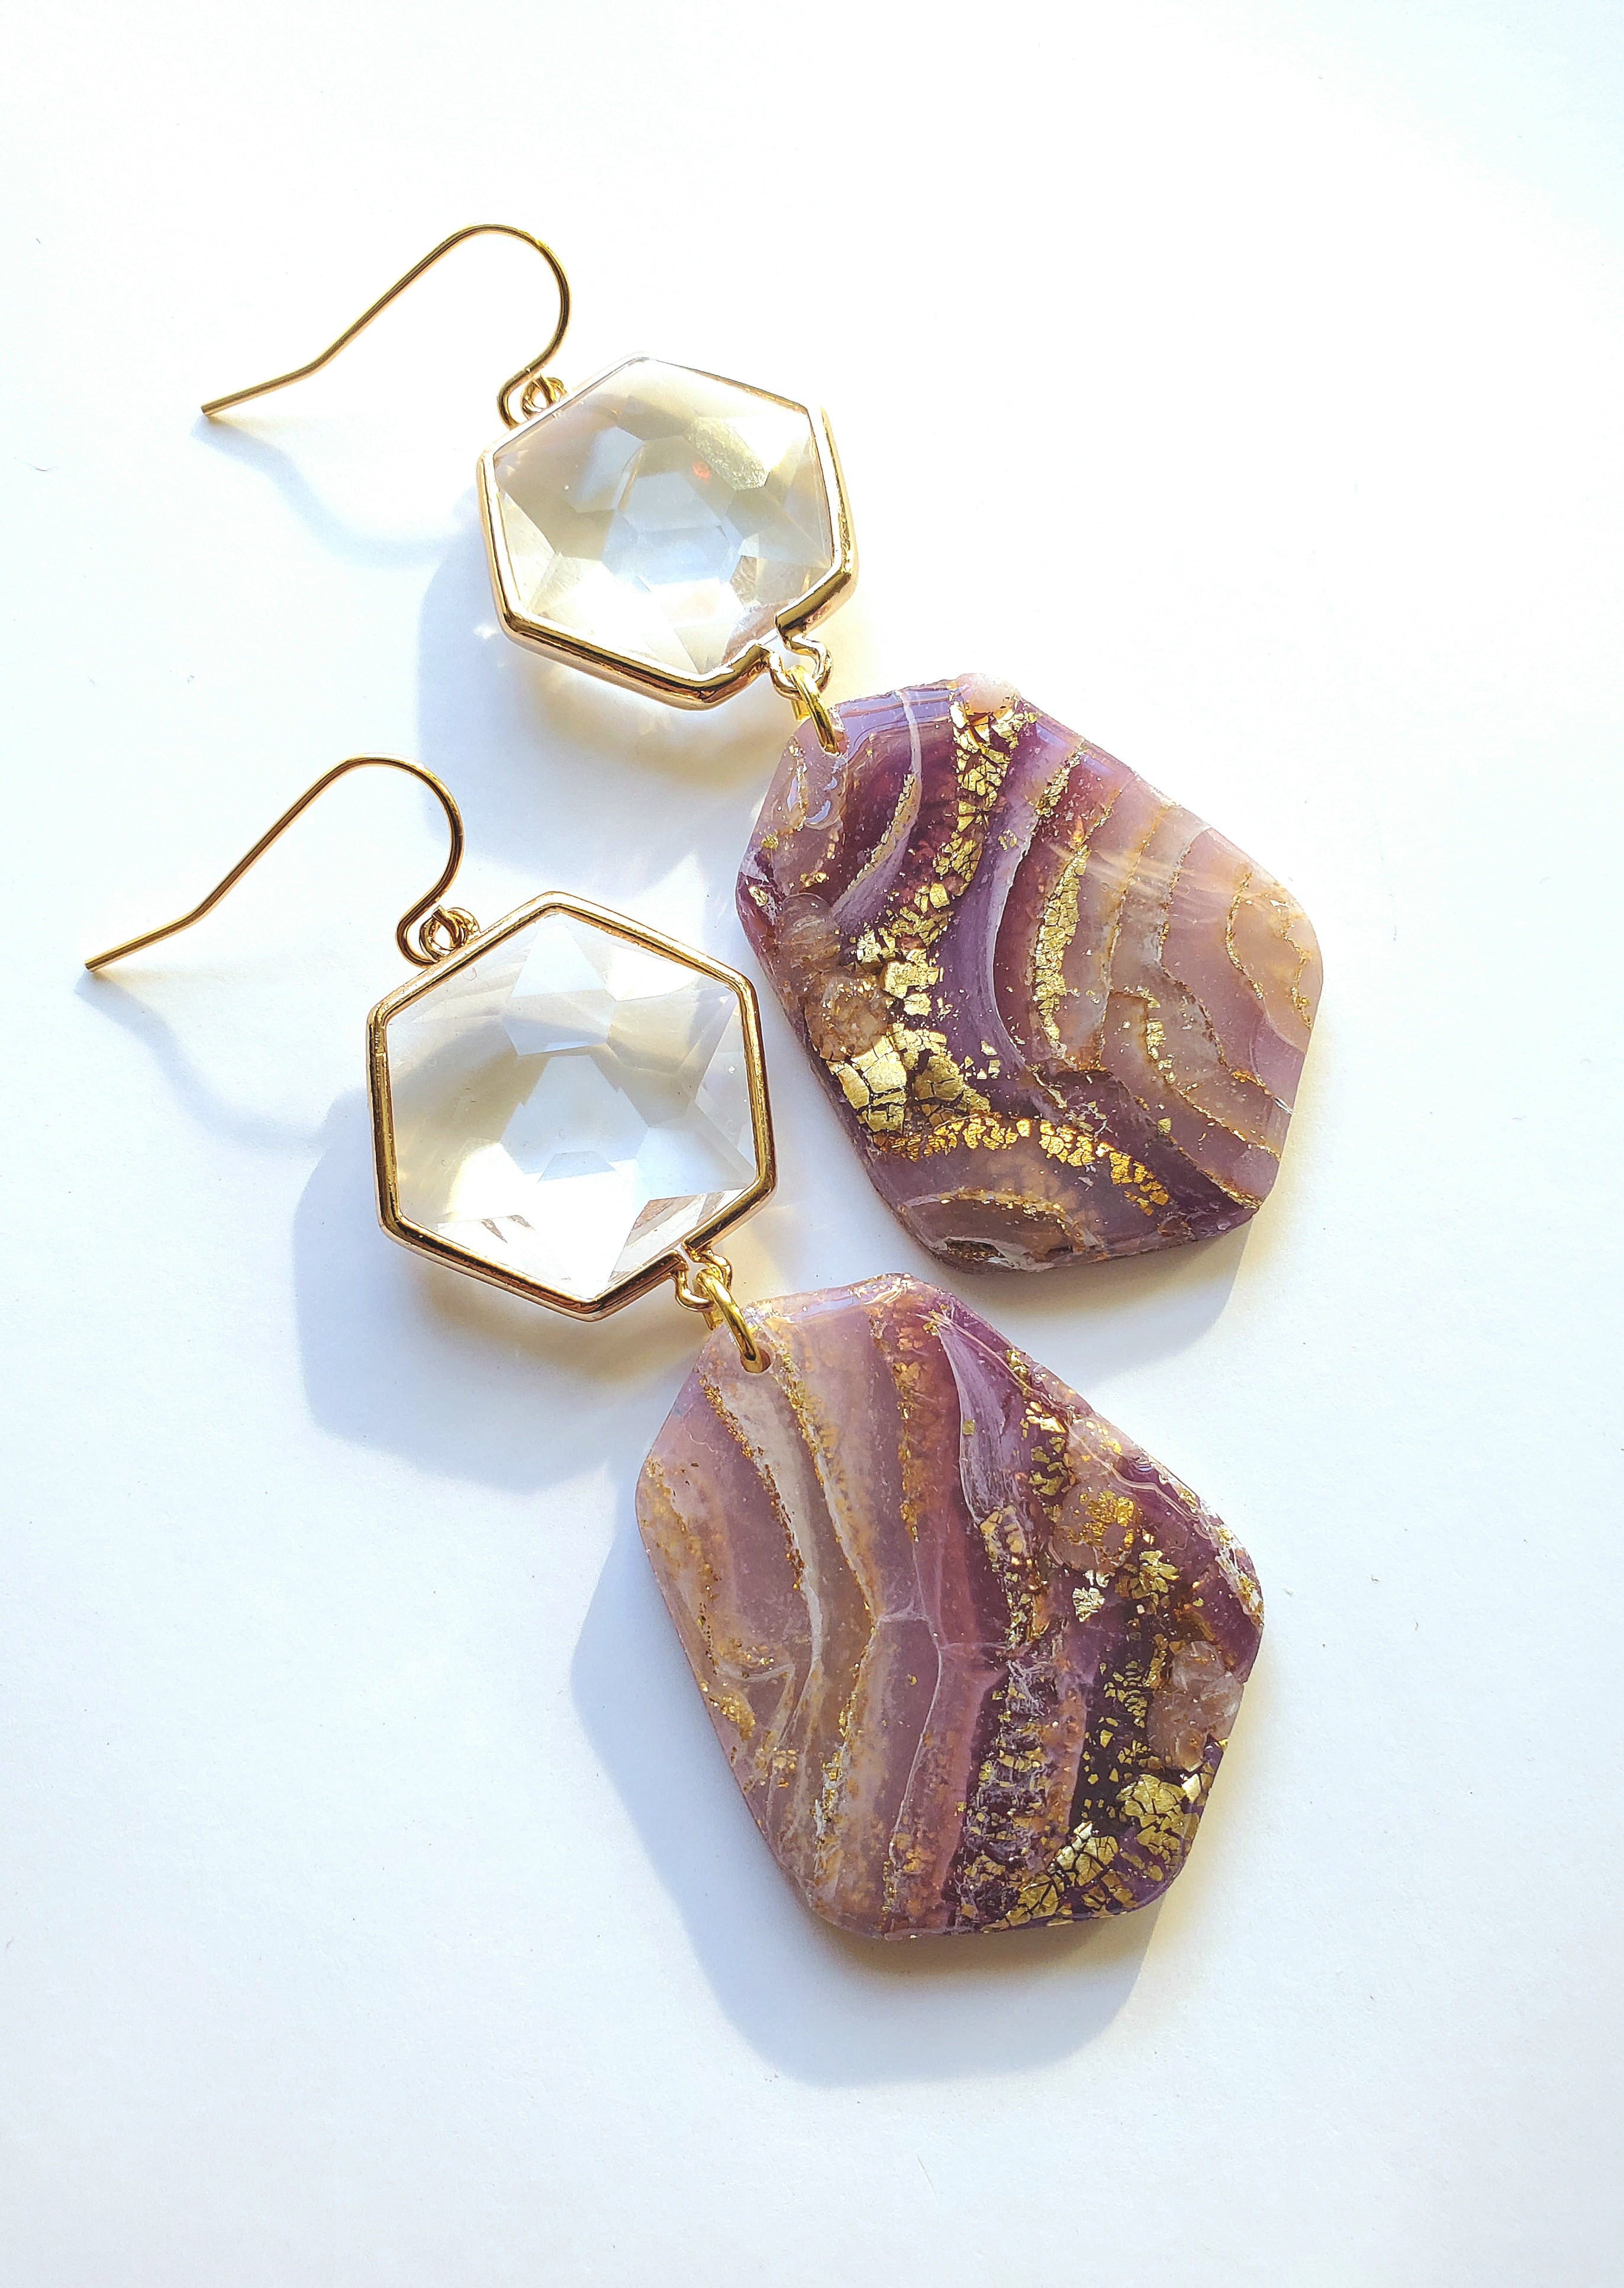 14K Gold Filled Agate Inspired Statement Earrings - Violet/Blush